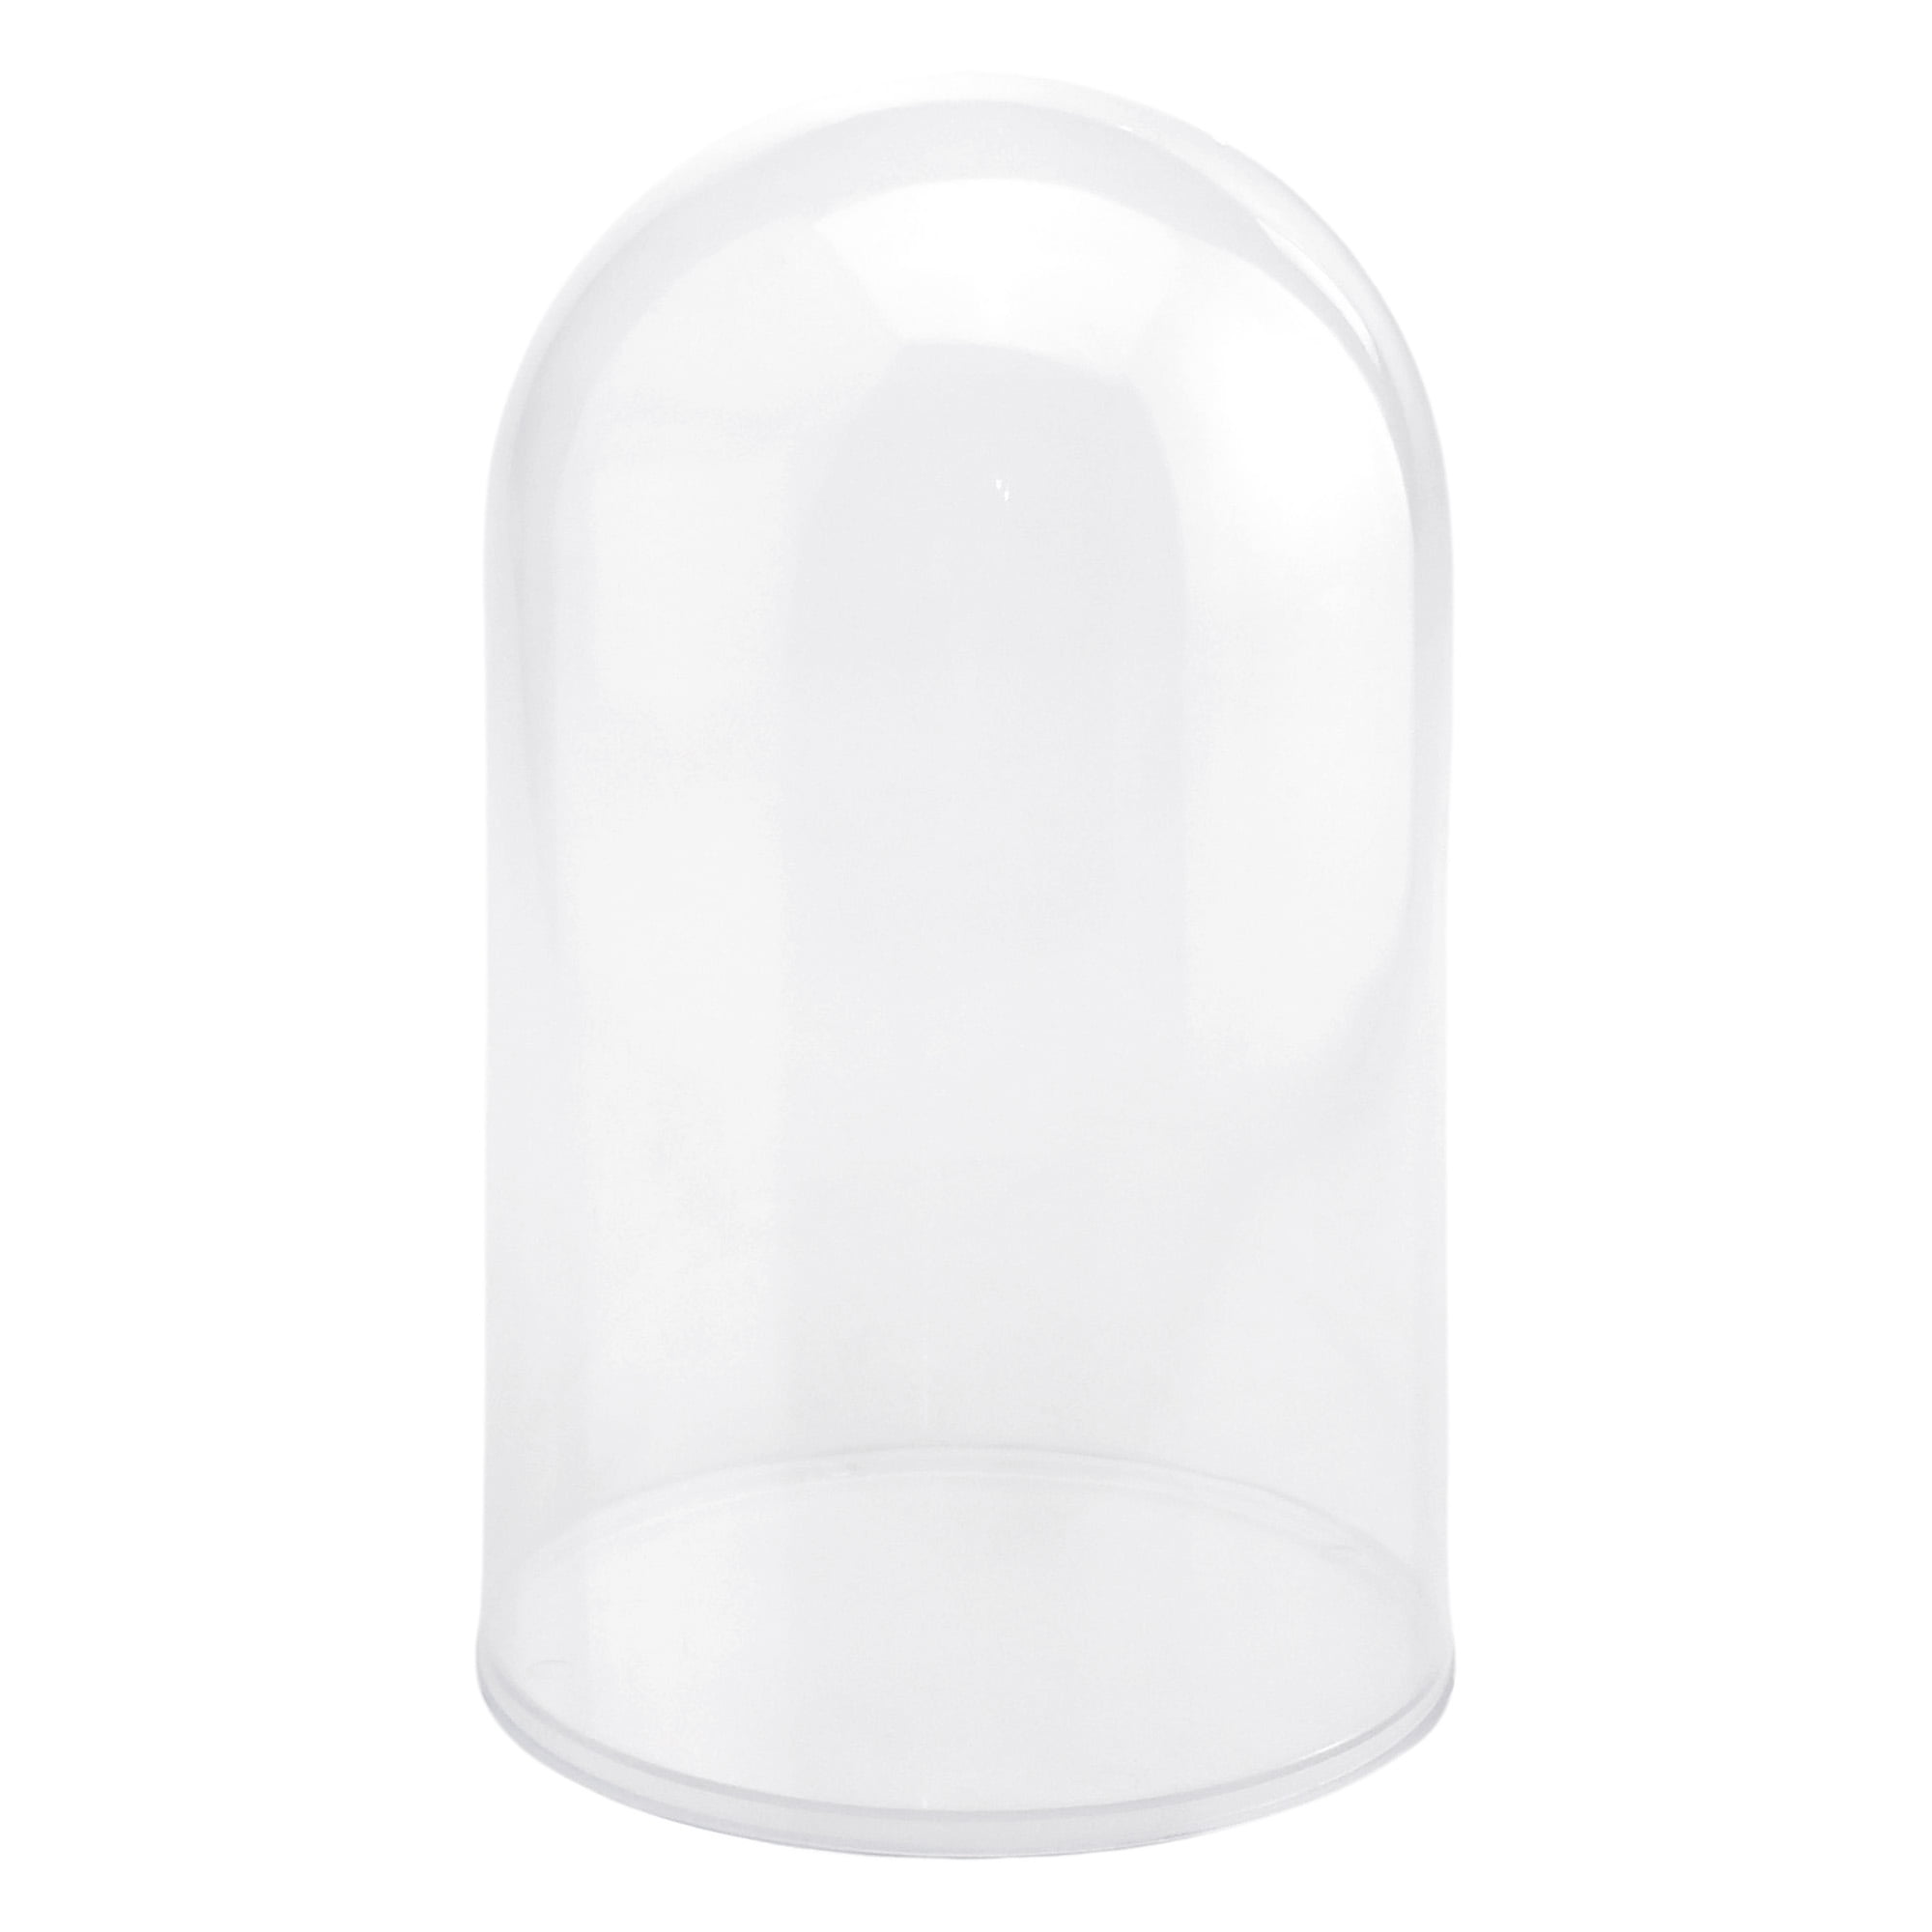 4 Clear Plastic Dome w/ Base (12 Pcs)